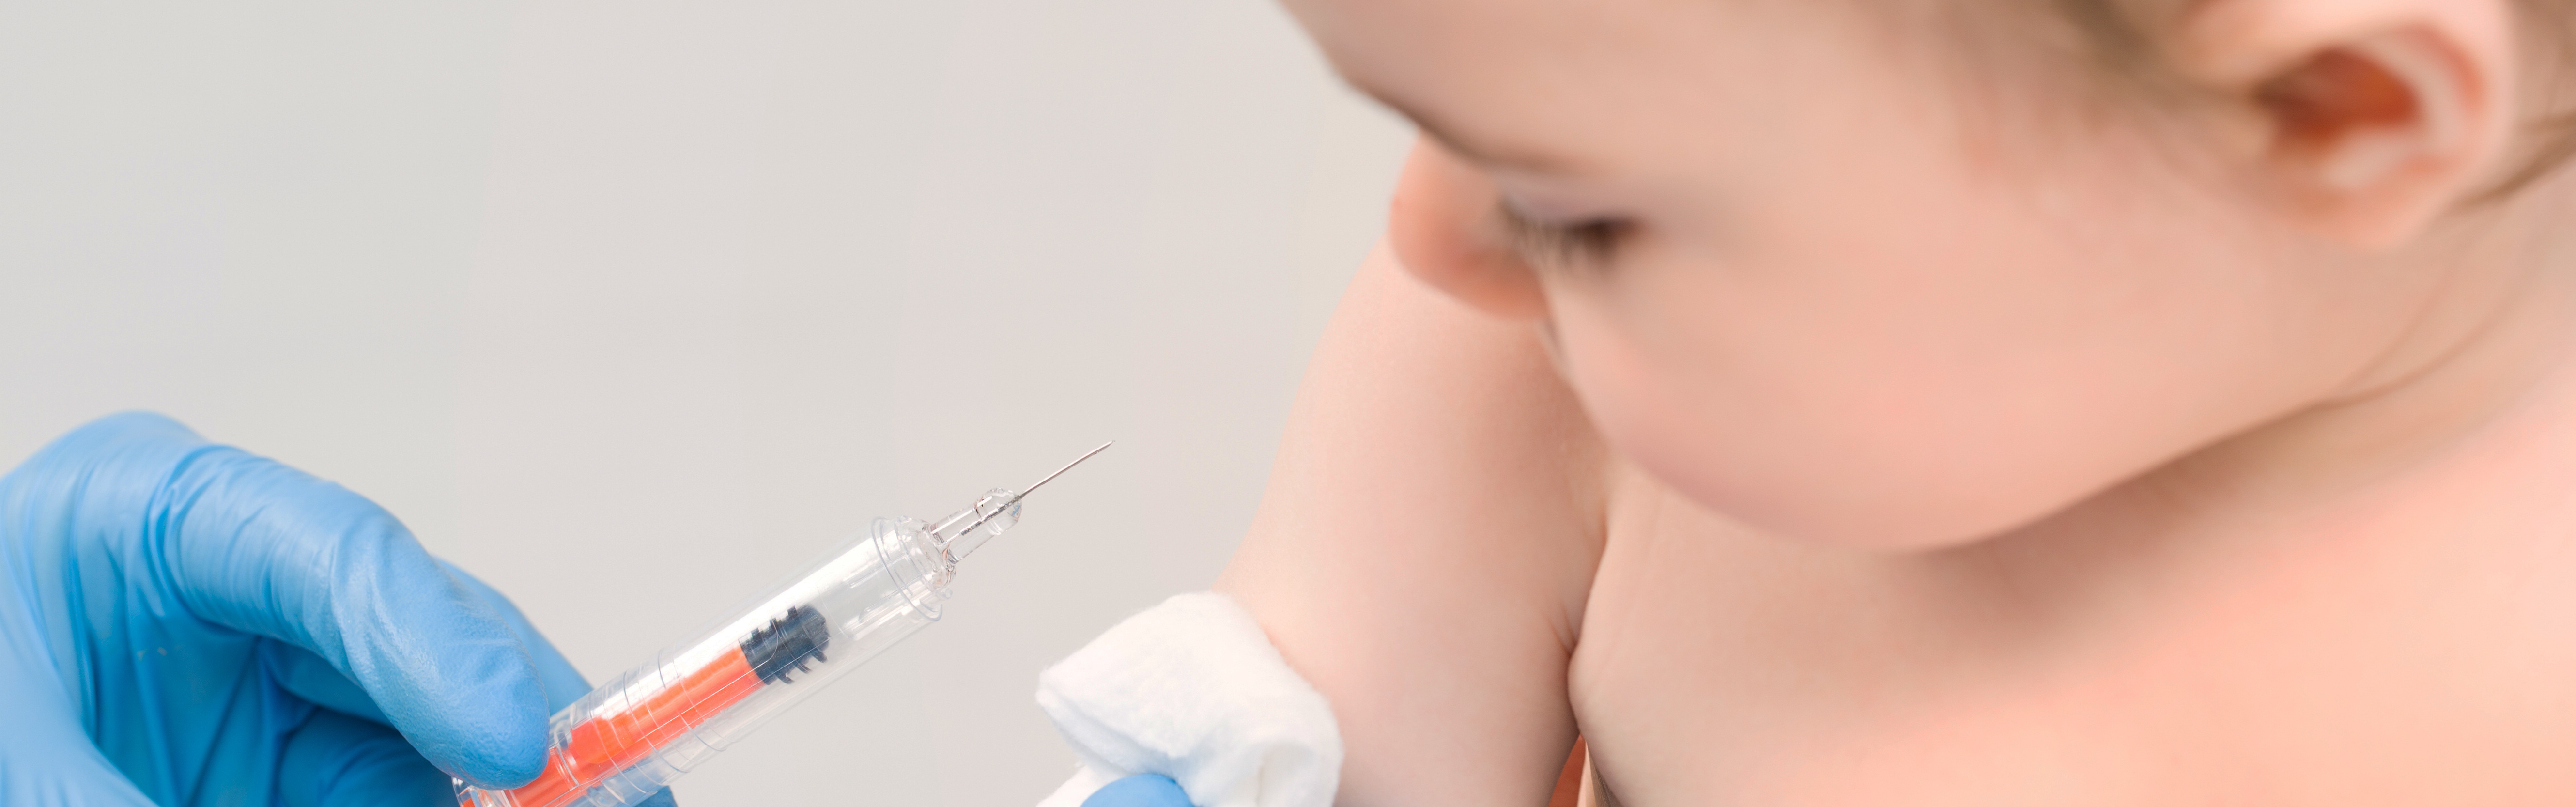 russia may be vaccine undermine immunize